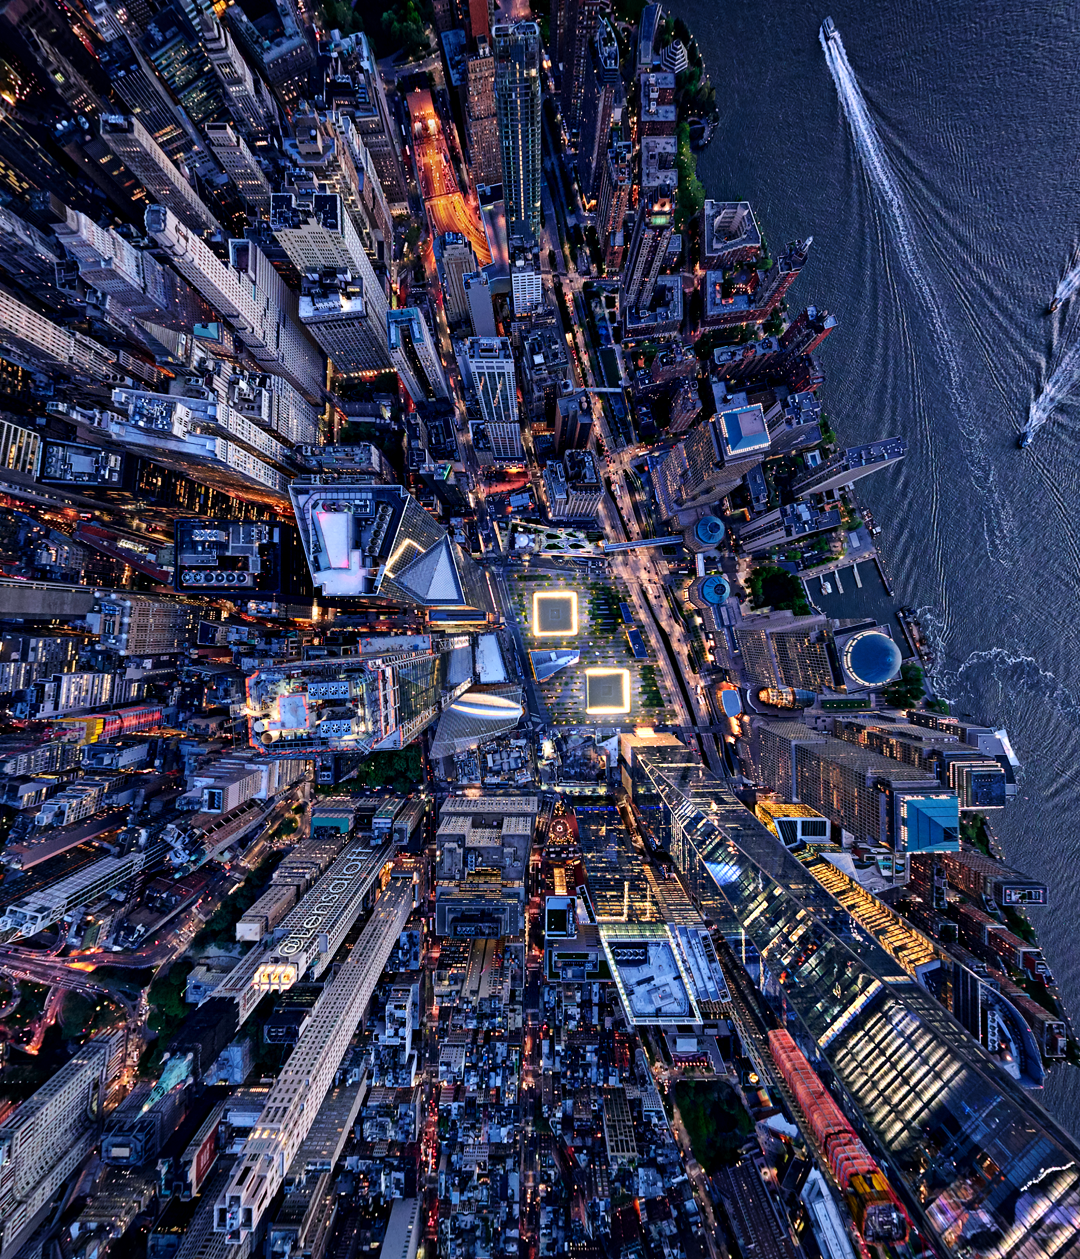 New York City's National September 11 Memorial & Museum seen from above.